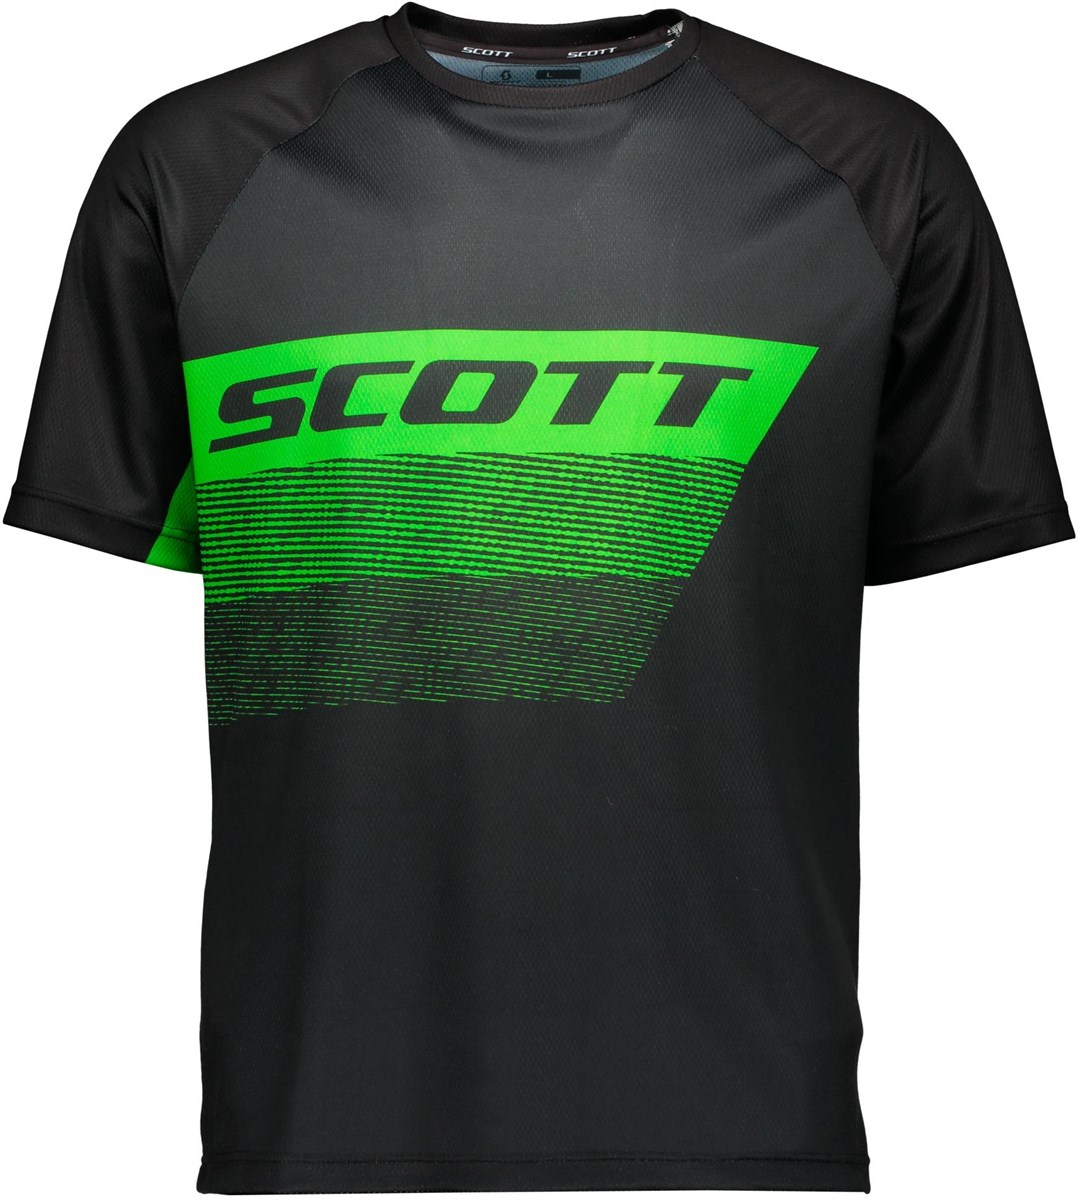 Scott Trail 60 Short Sleeve Cycling Shirt / Jersey product image